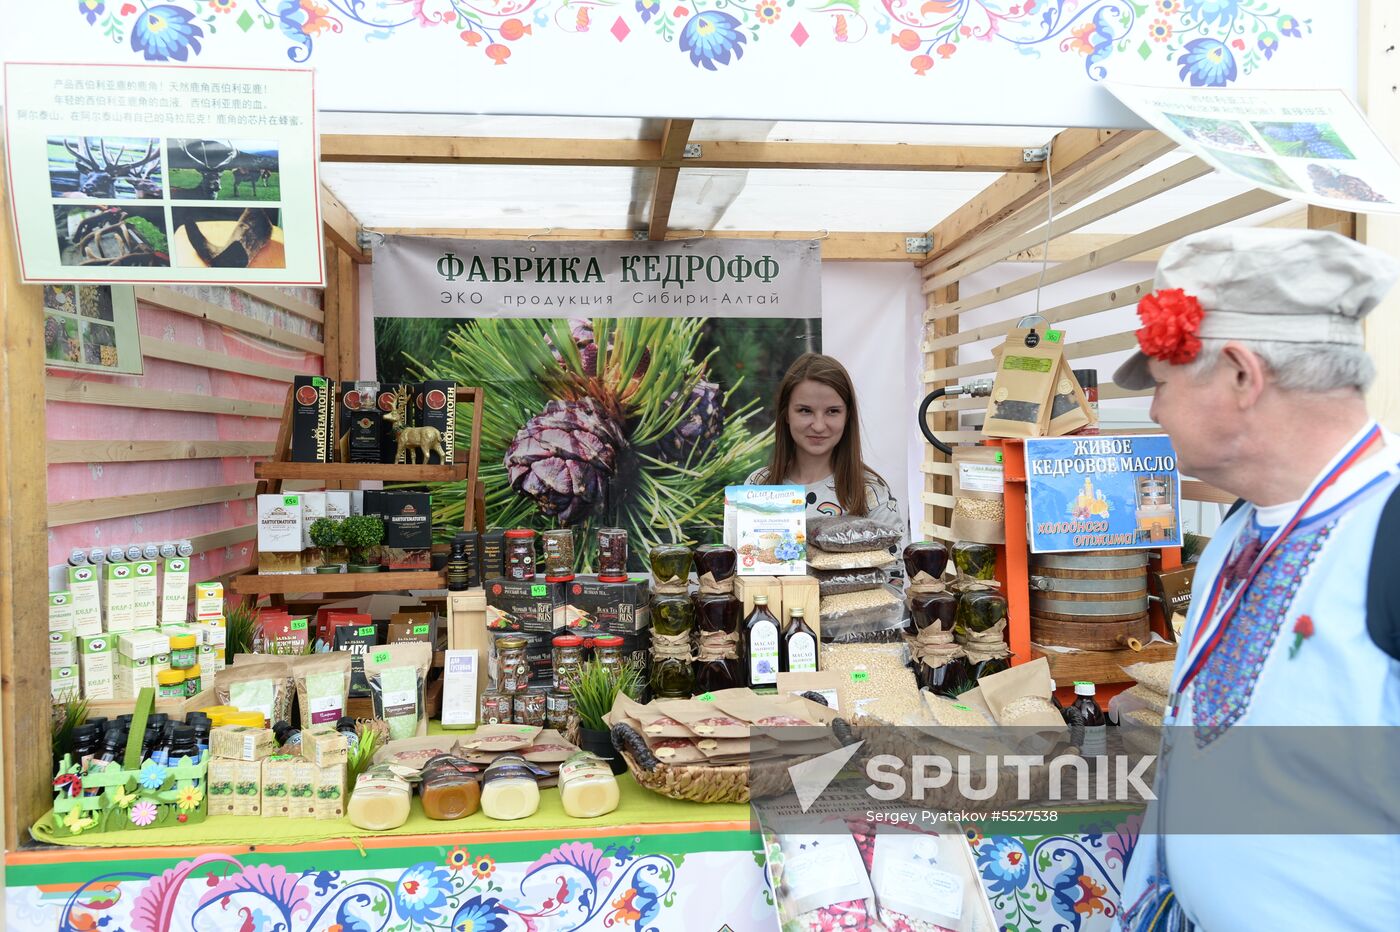 Russian hospitality festival Samovarfest